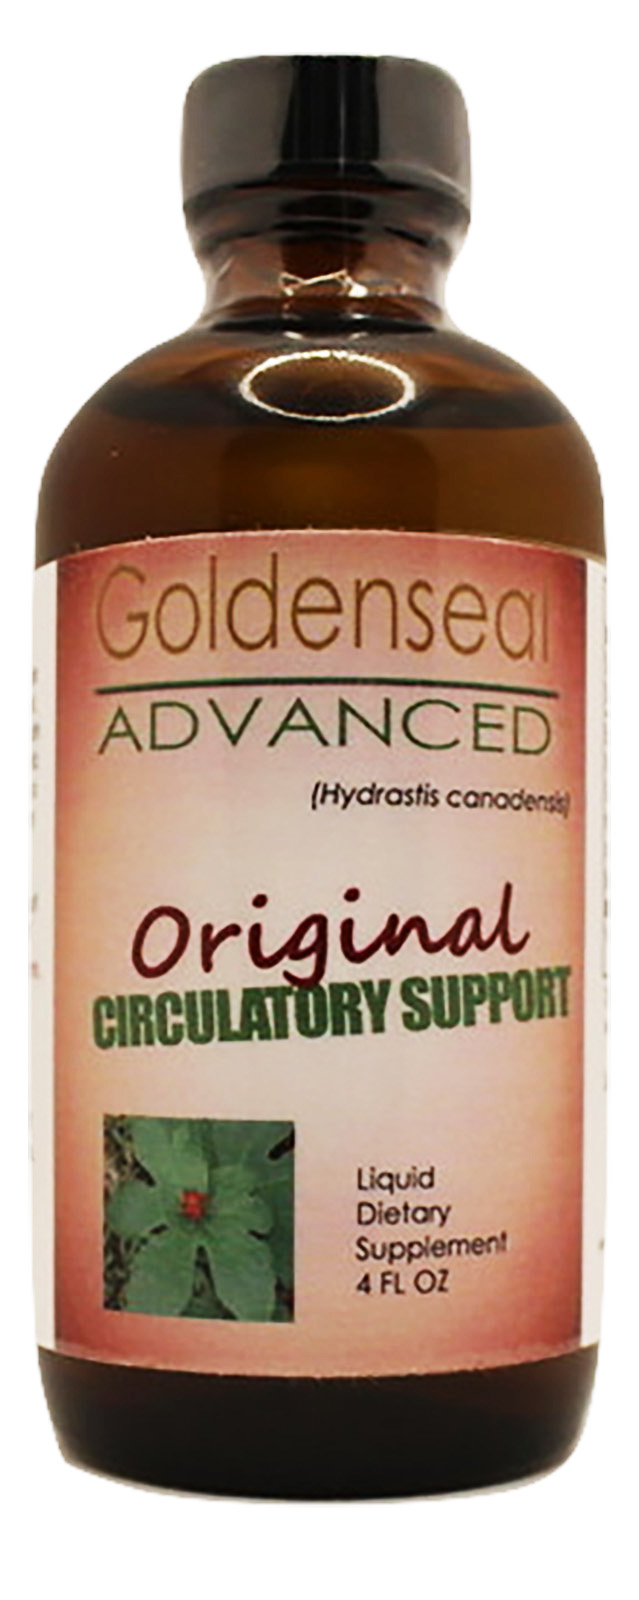 Goldenseal Advanced Circulatory Support